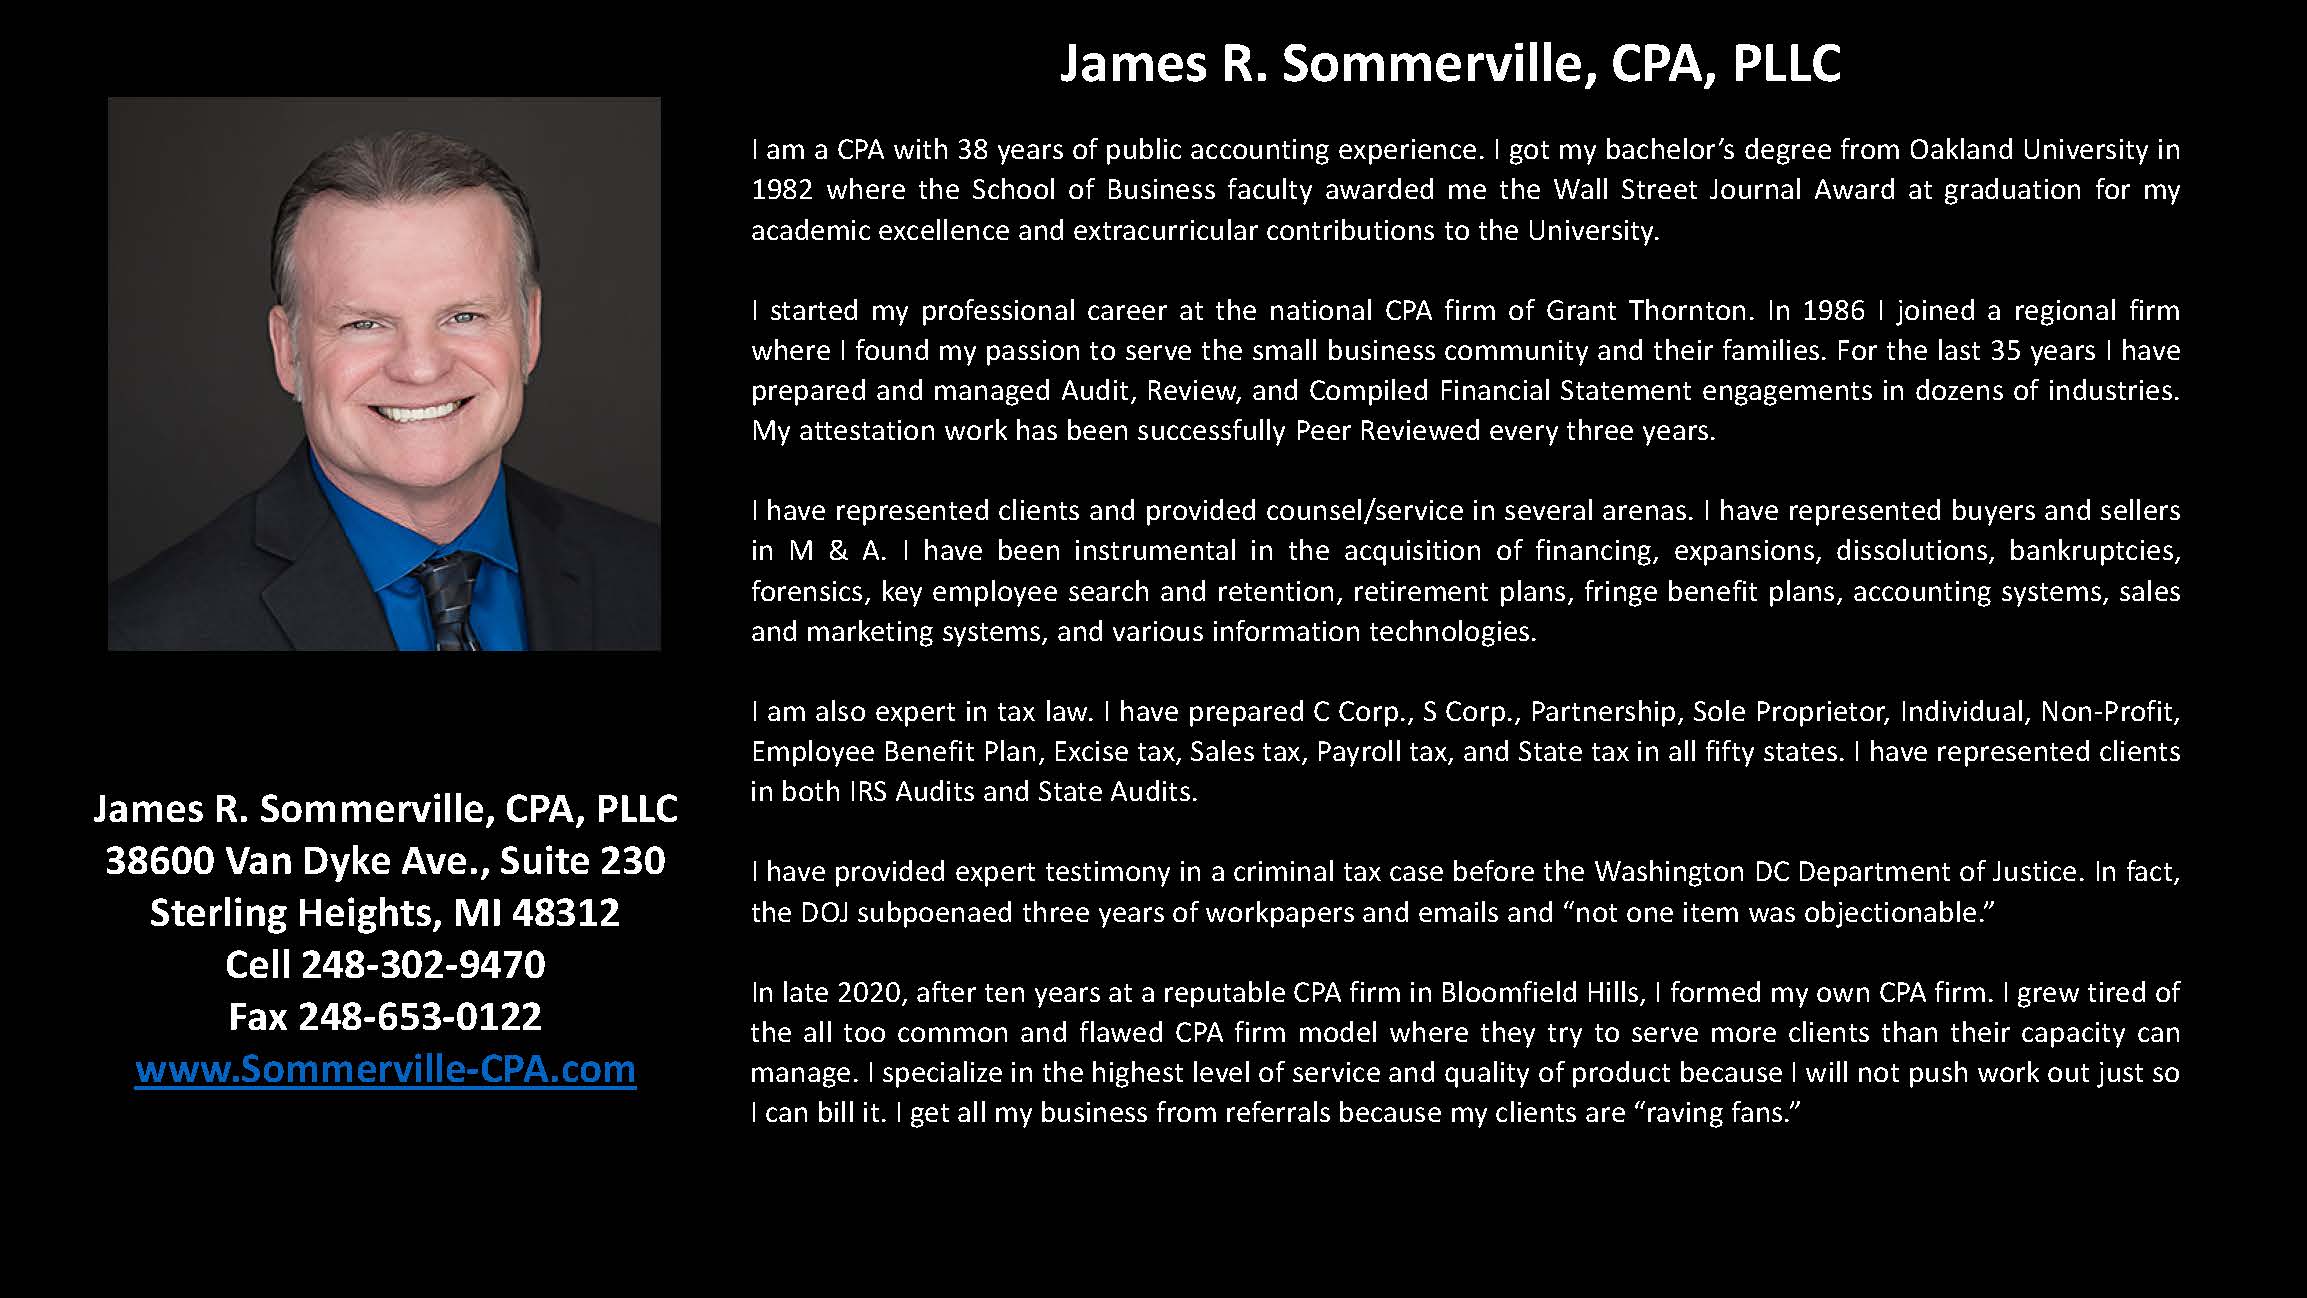 APEG James R. Sommerville, CPA, PLLC